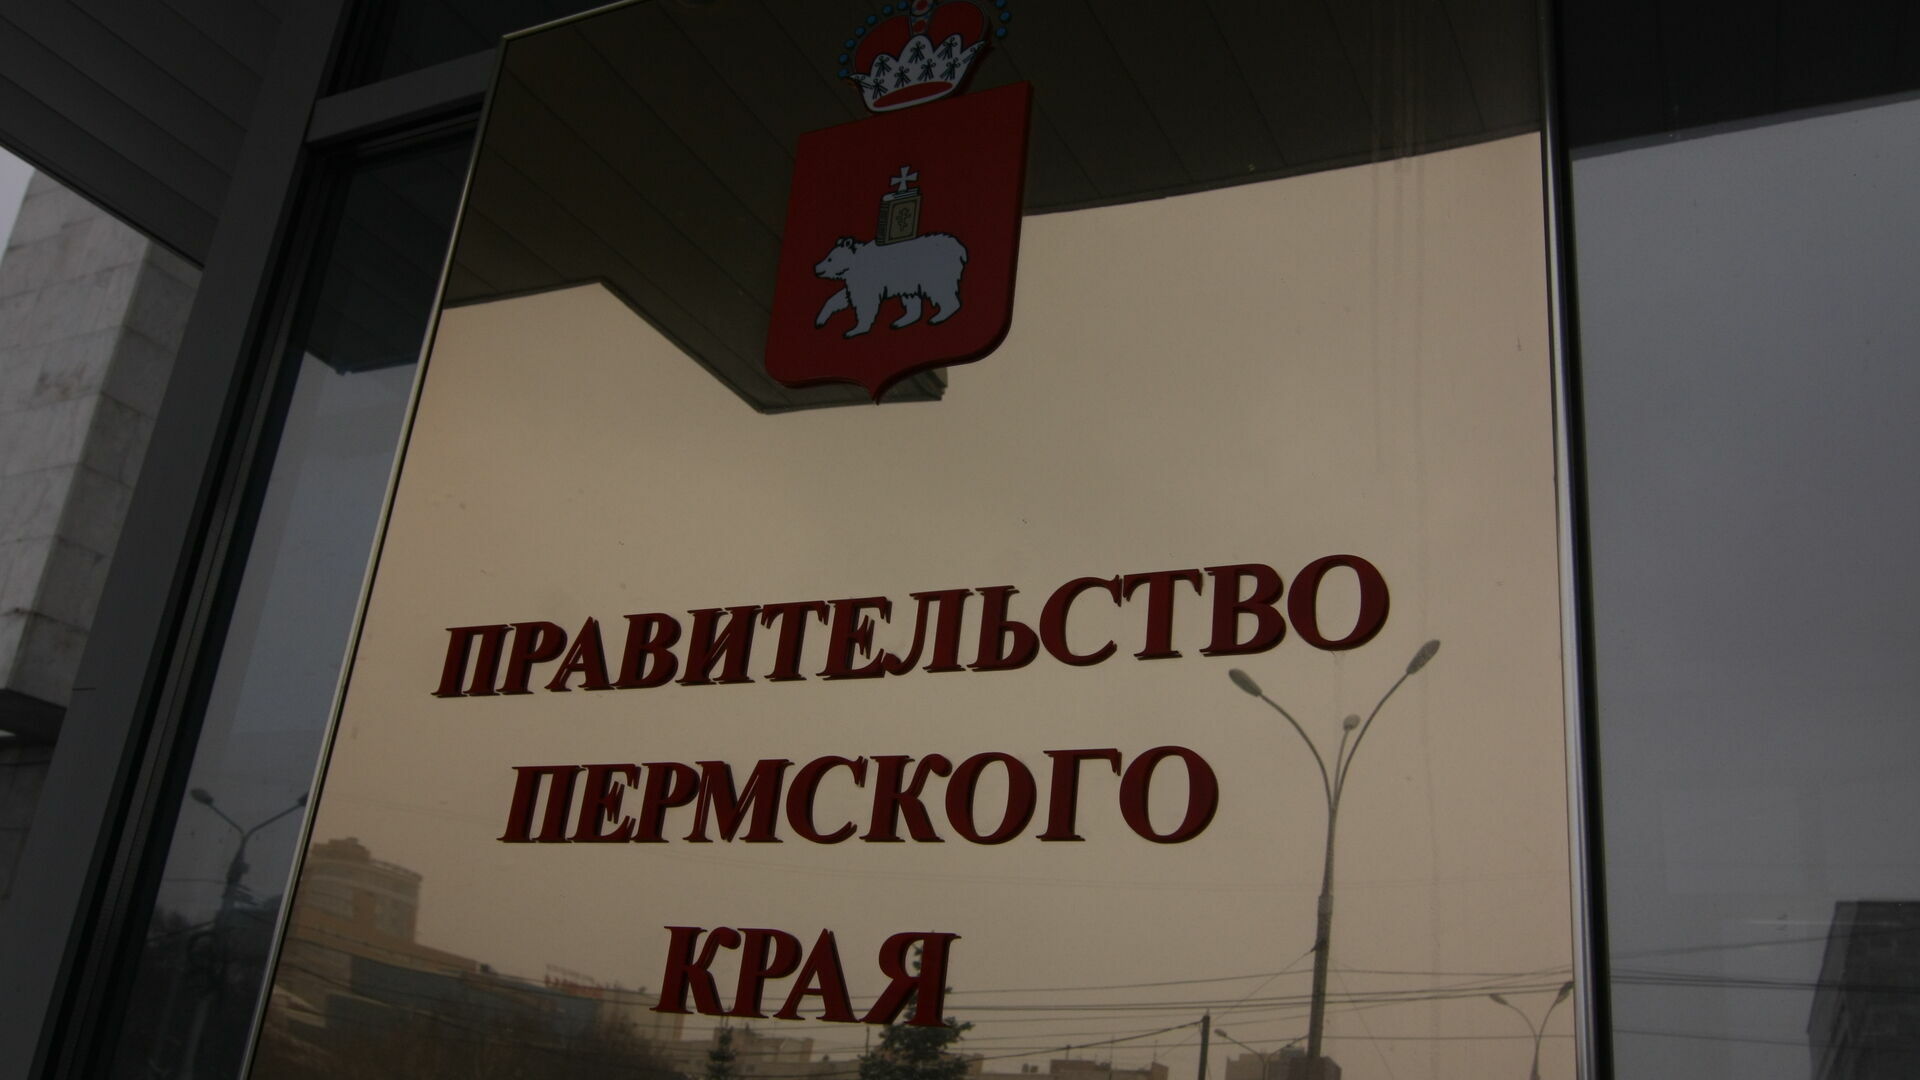 Министерство транспорта пермского